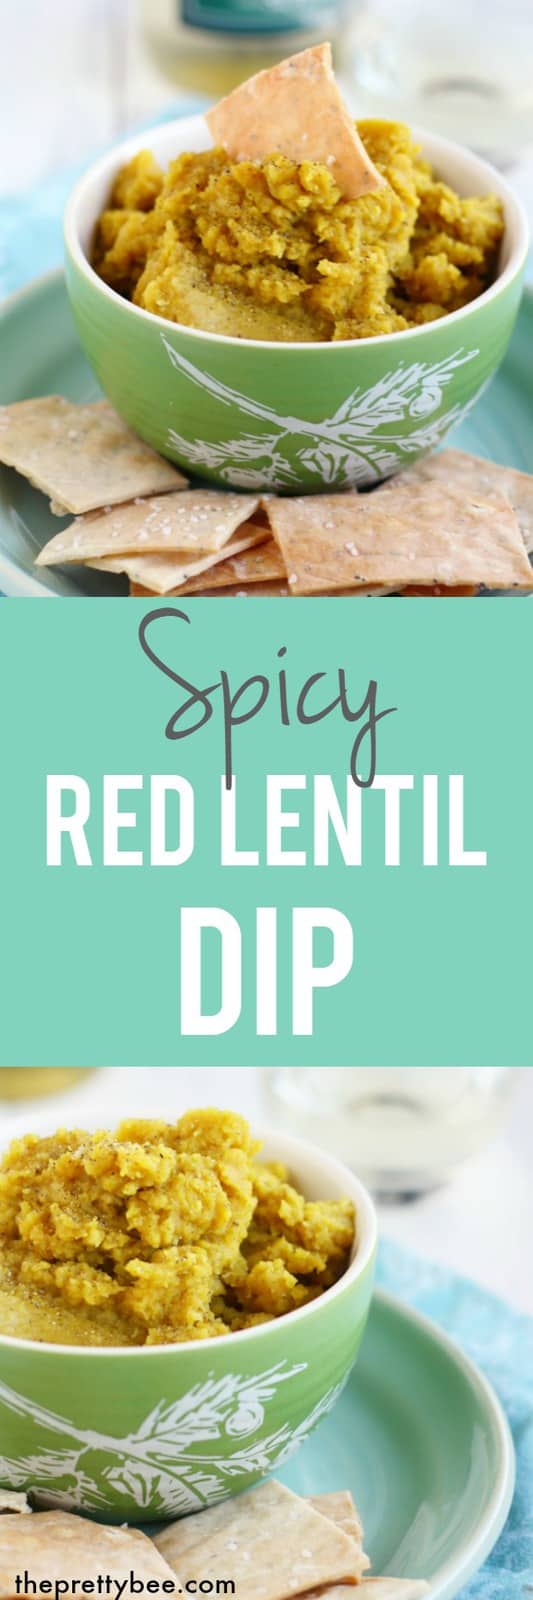 spicy red lentil dip recipe